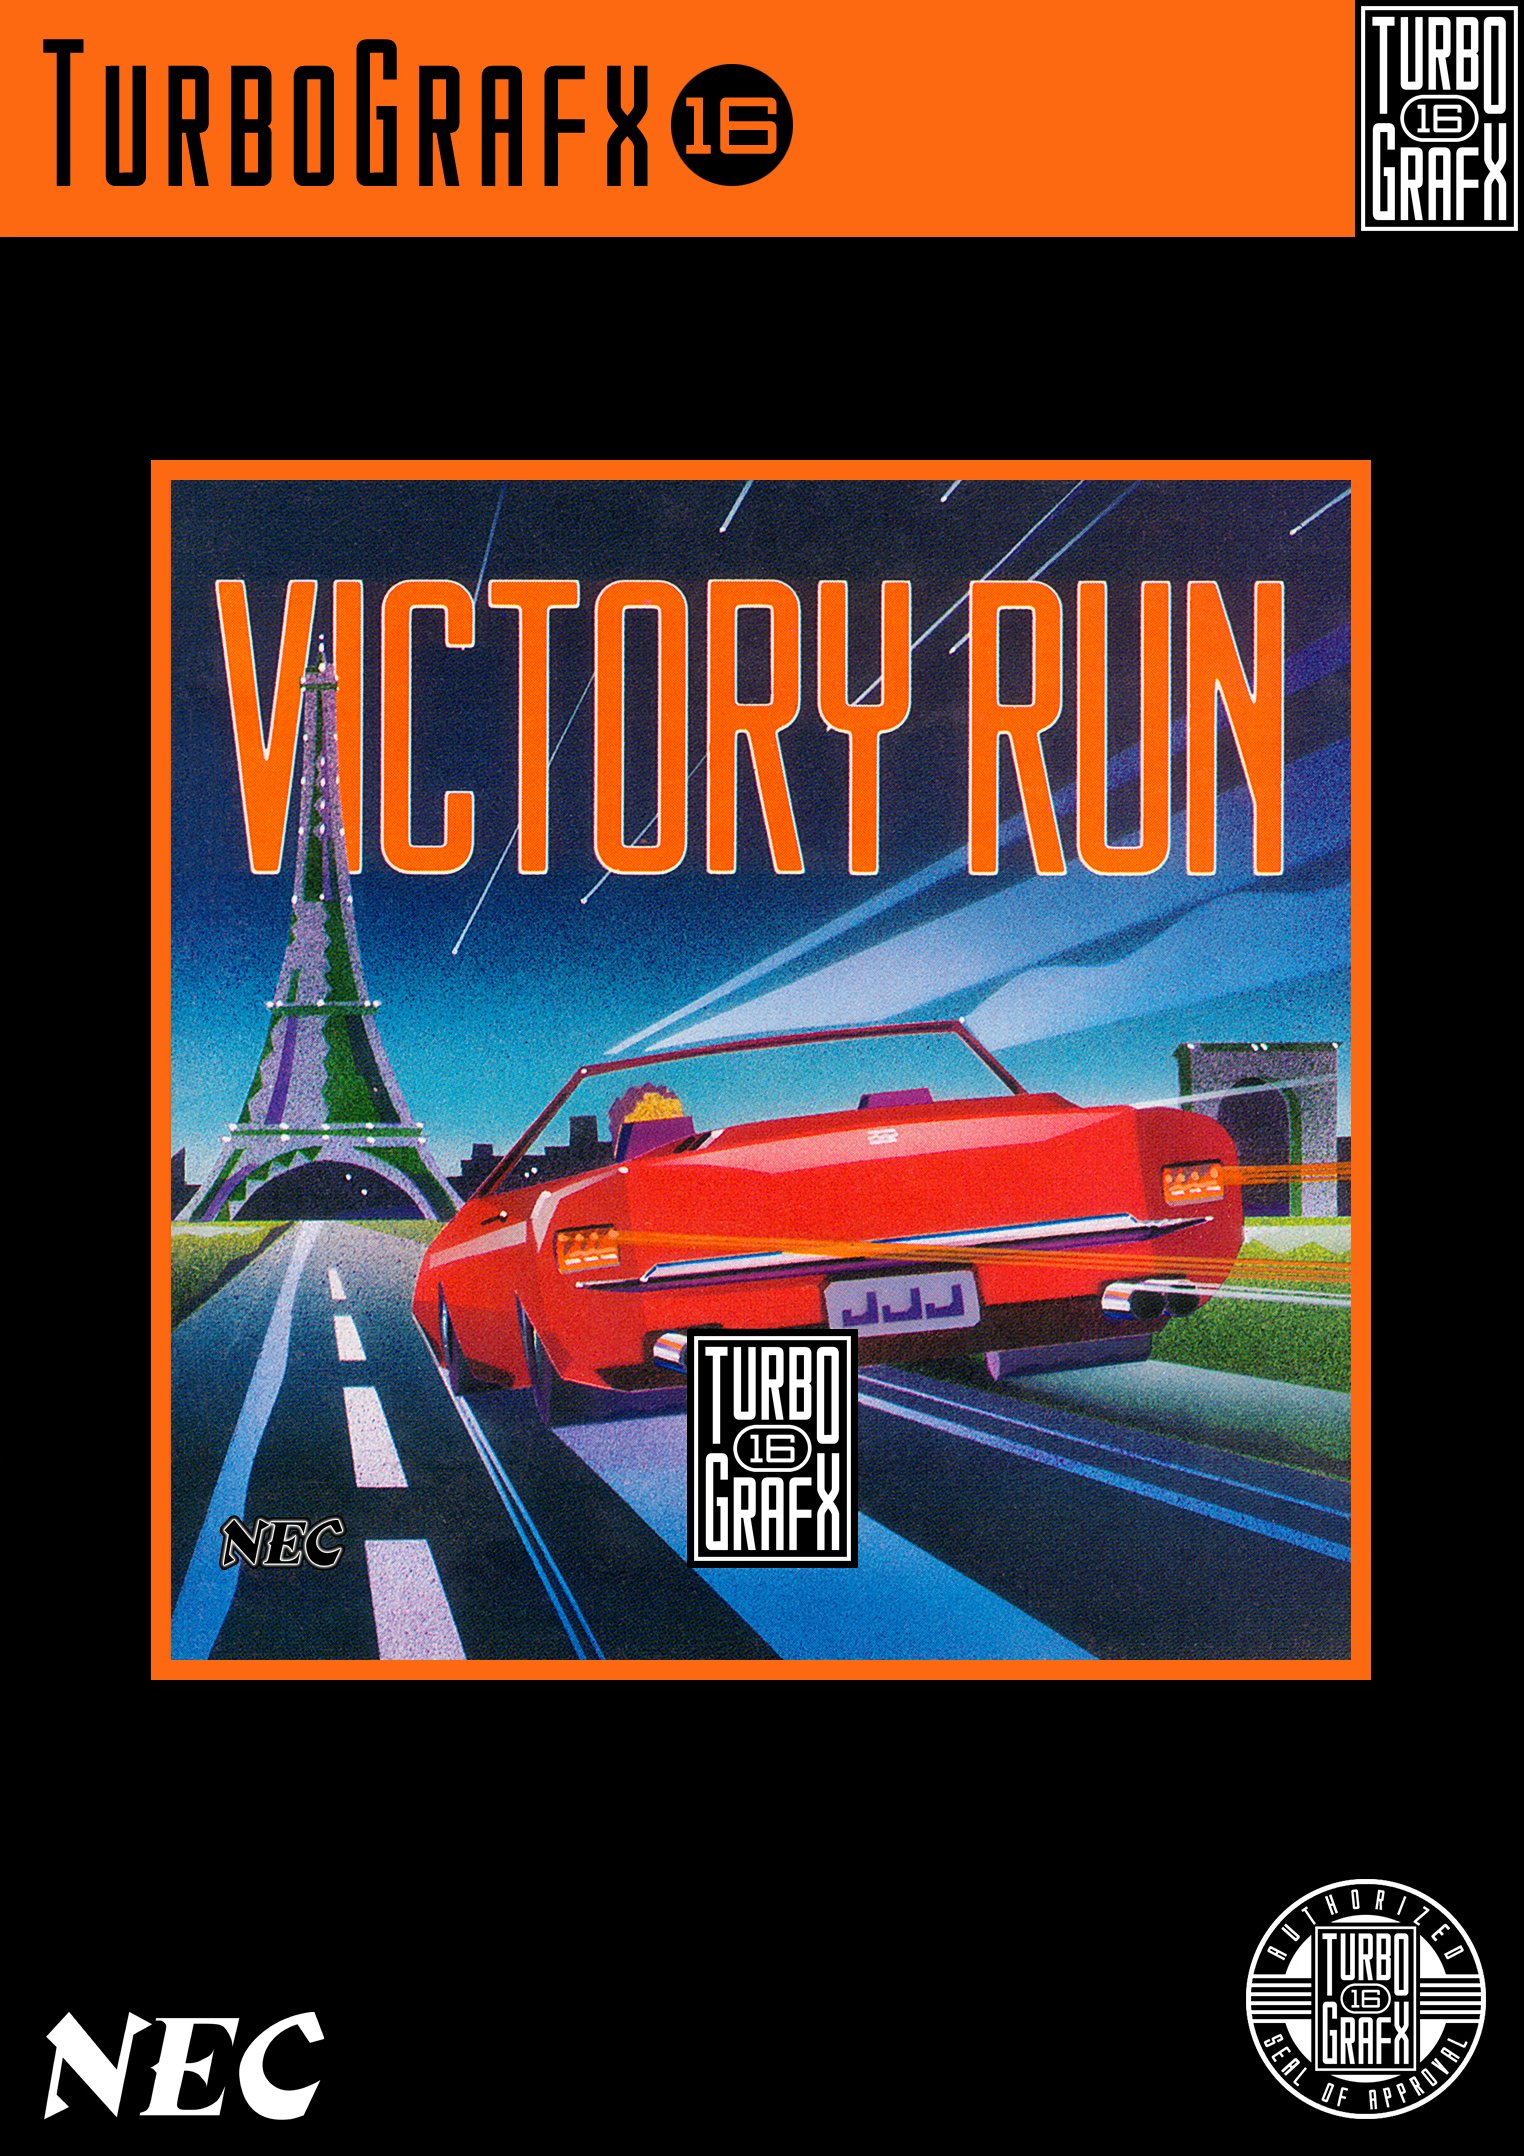 Image of Victory Run